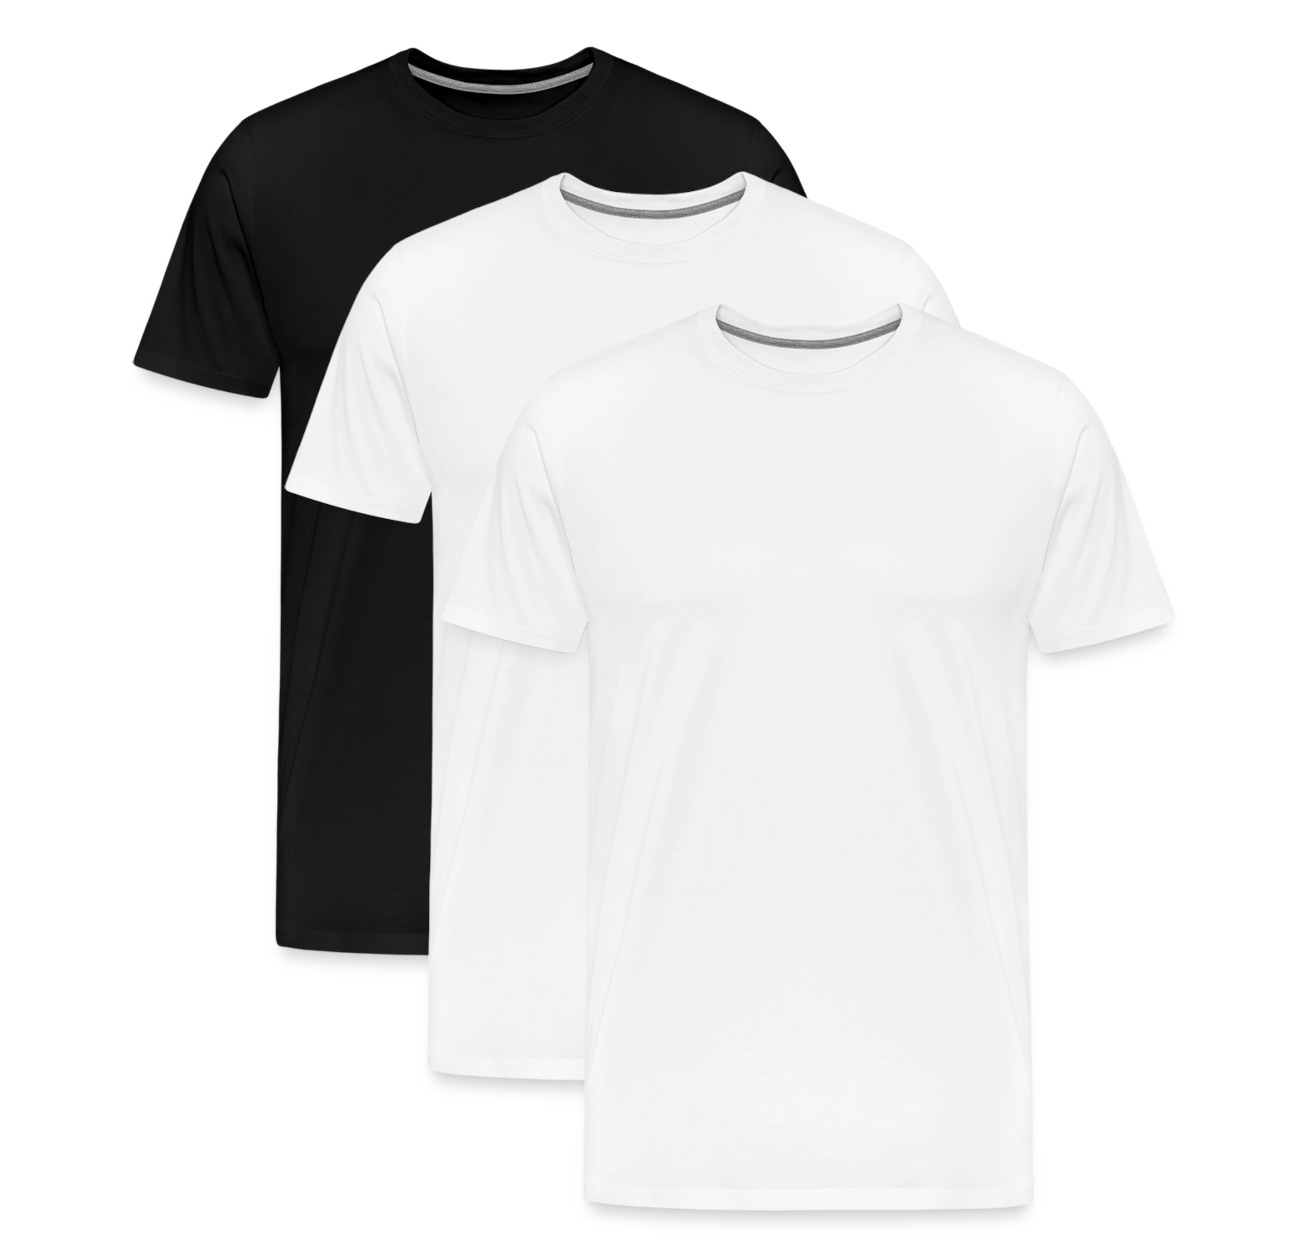 Fluent Tee Variety 3-Pack (Size L) - Men's Premium T-Shirt from fluentclothing.com